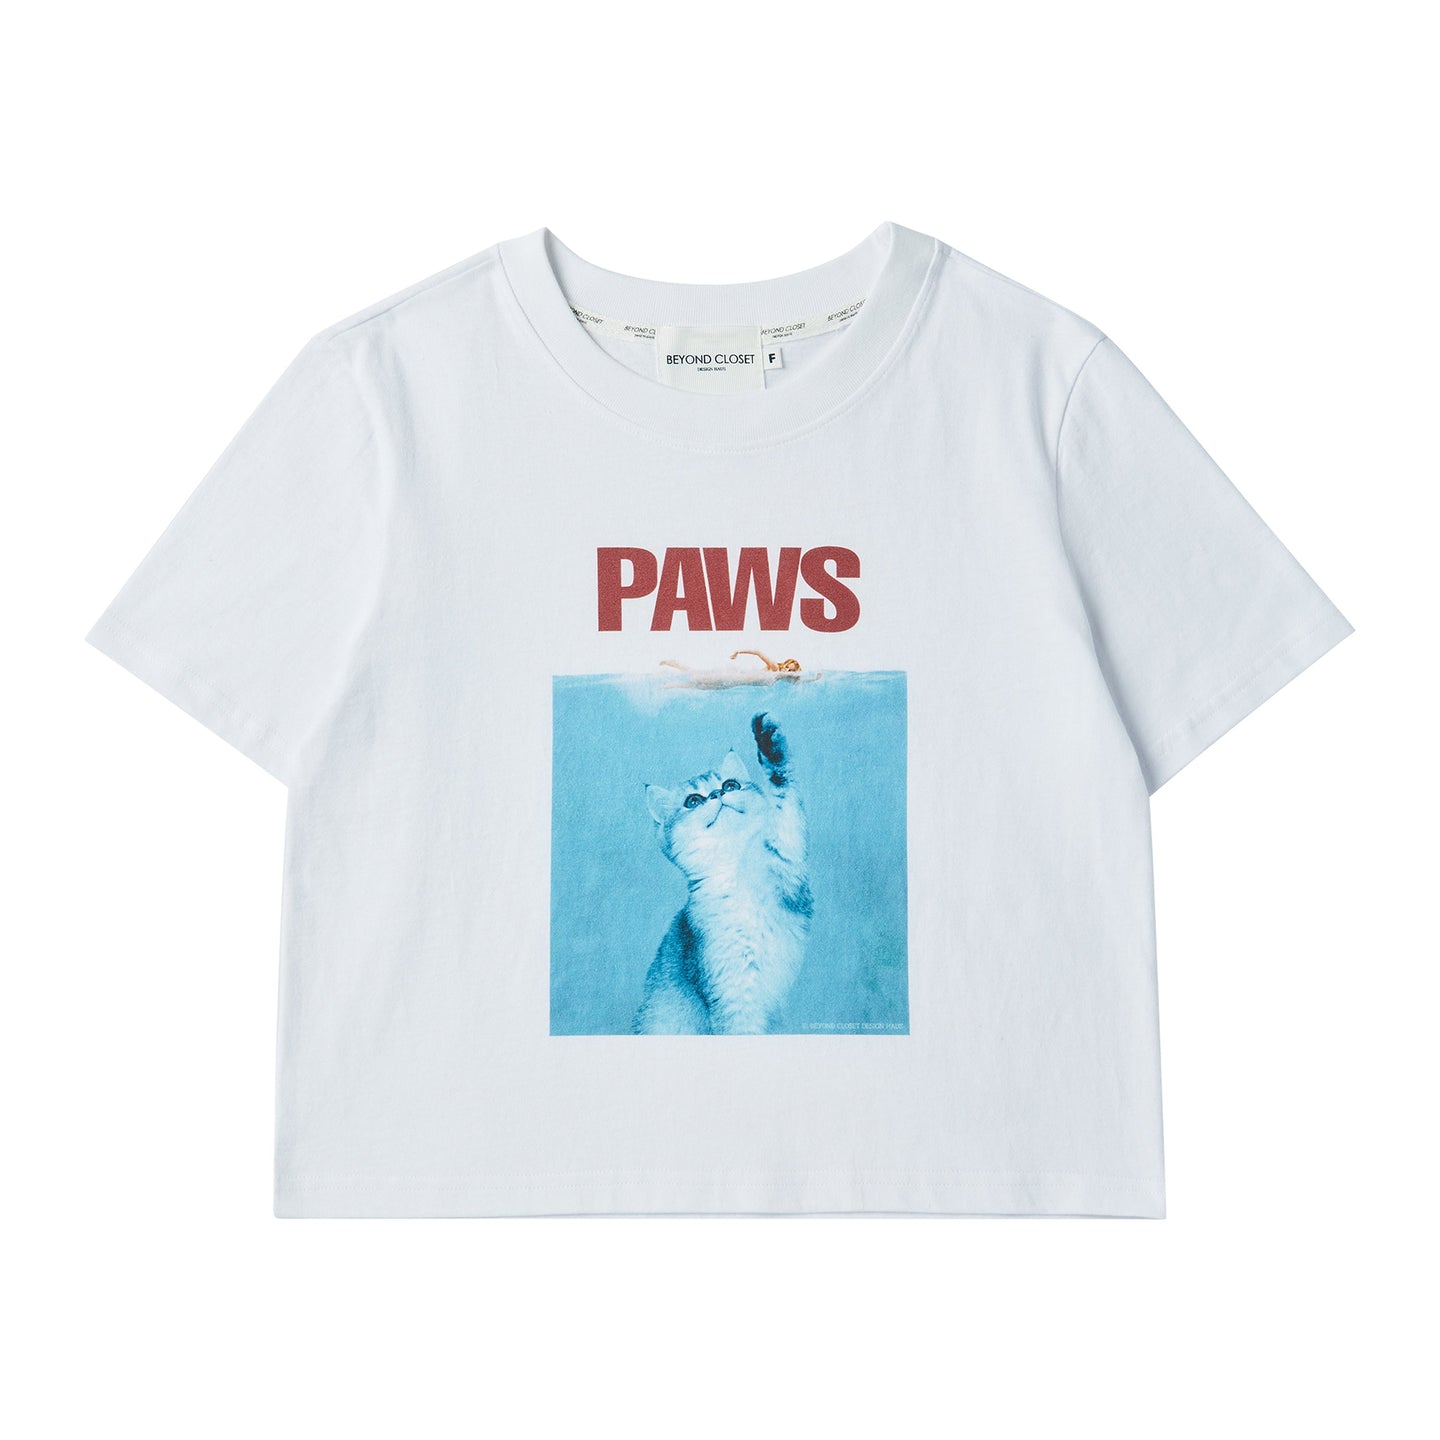 BEYOND CLOSET Women's Edition Paws Summer Print T-Shirt White